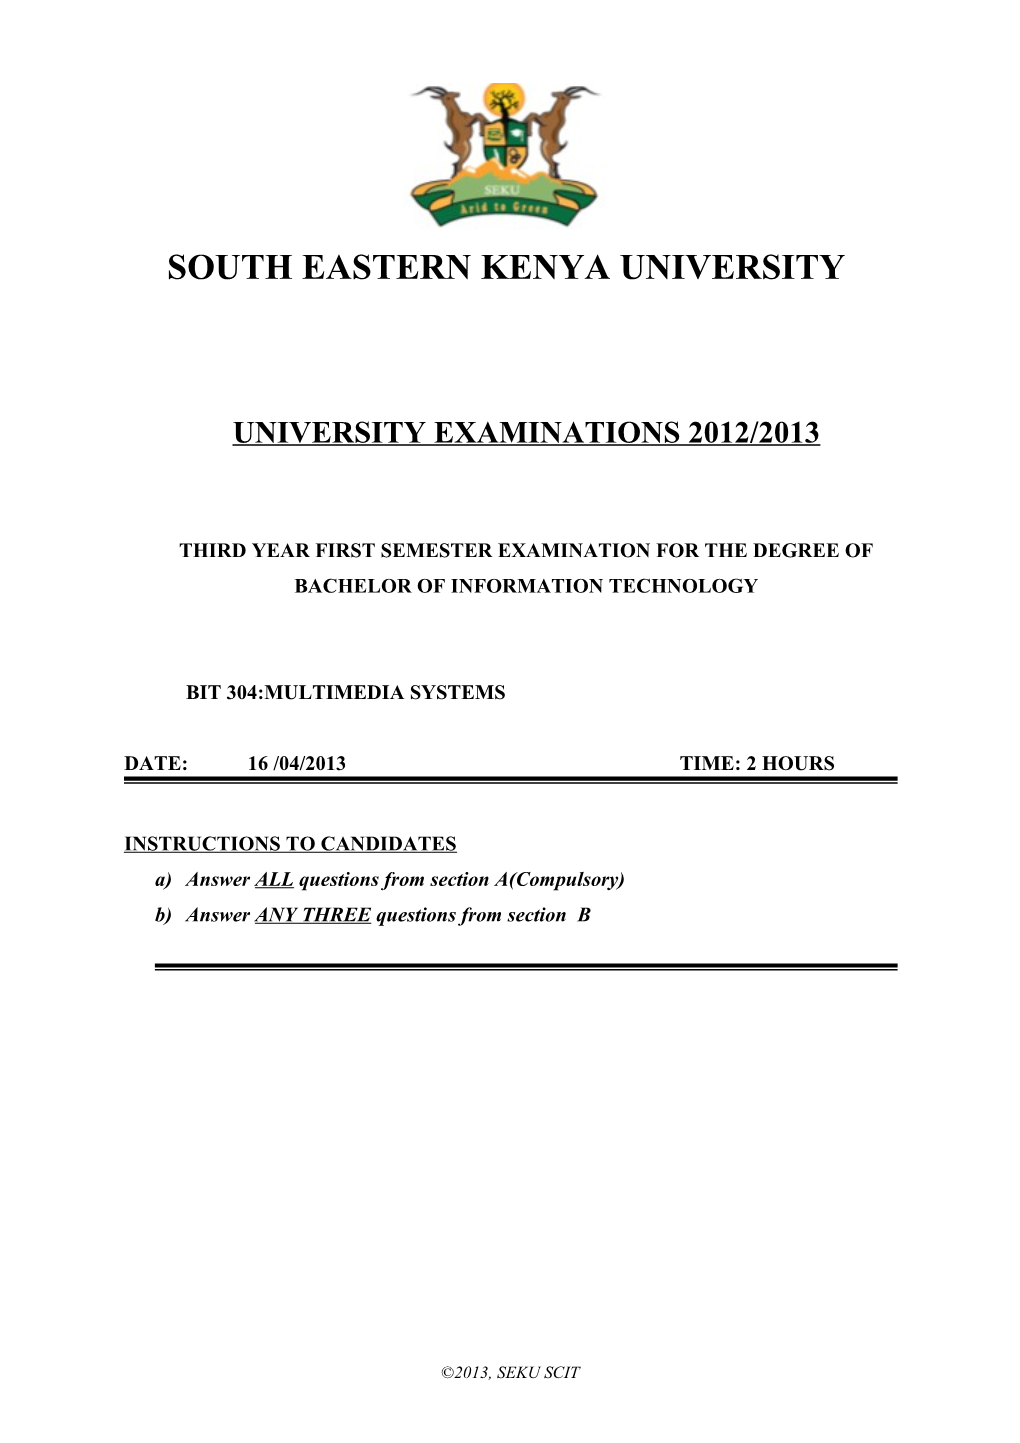 South Eastern Kenya University